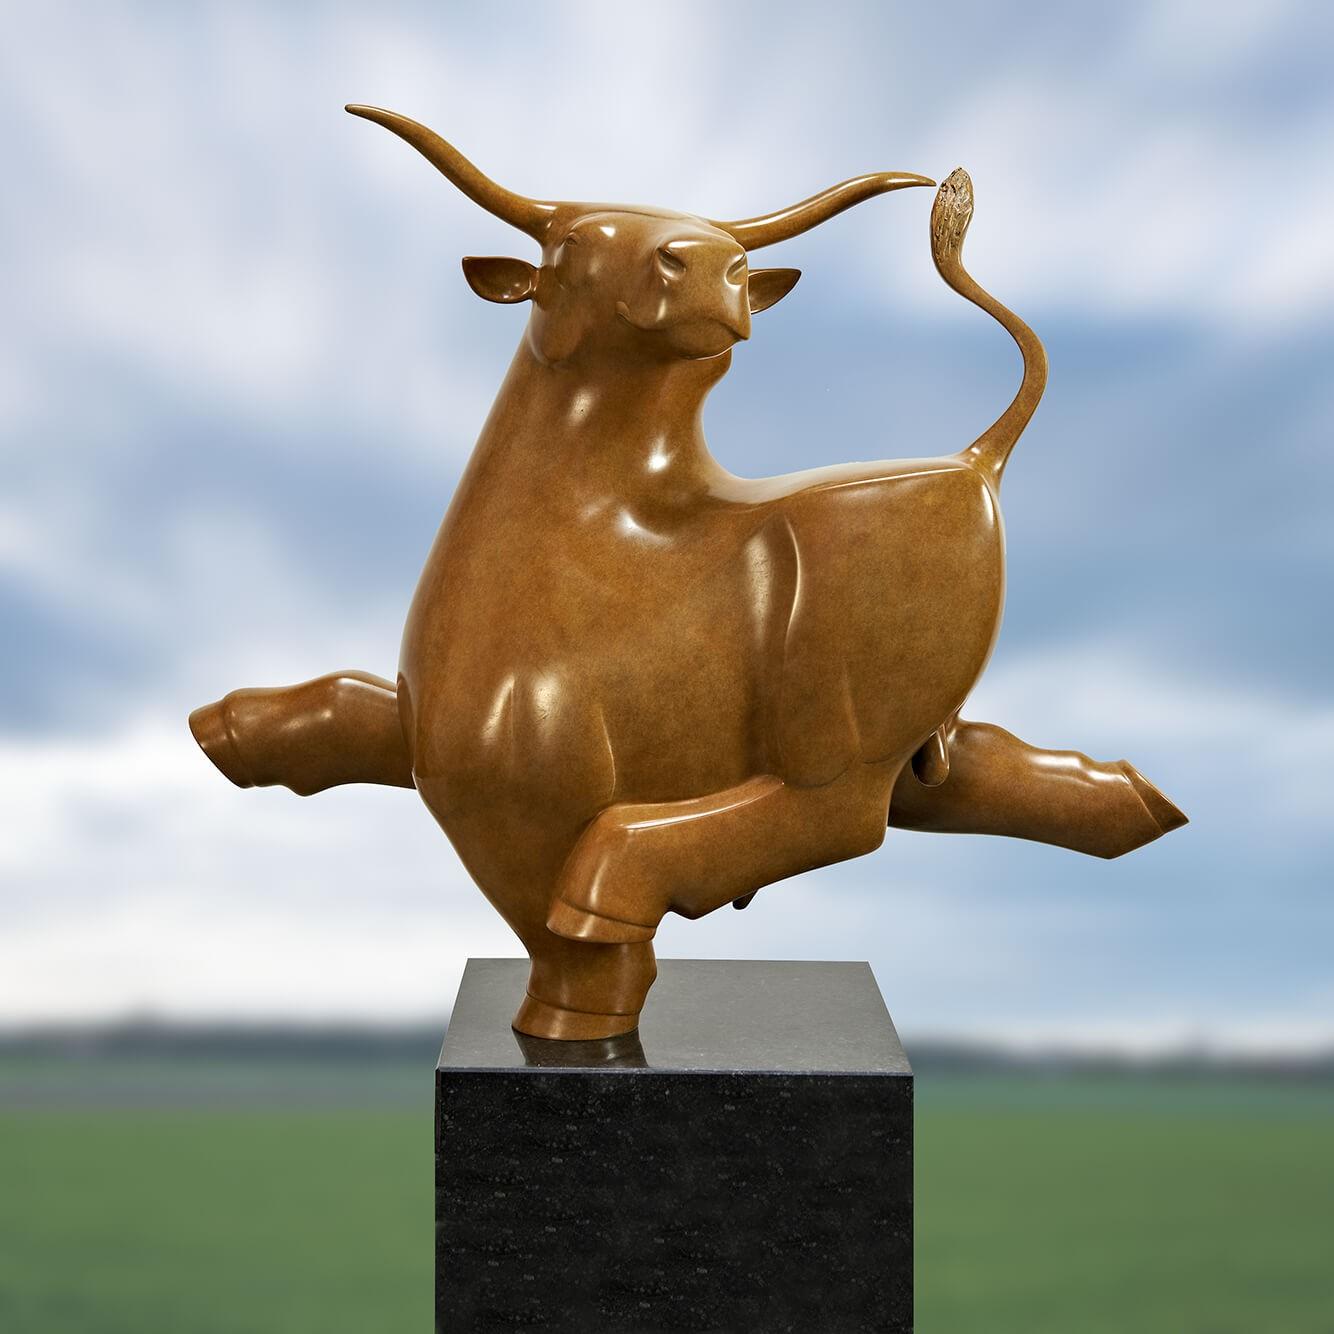 Figurative Sculpture Evert den Hartog - Wandelende Stier n° 3 Groot - Grand taureau qui marche - Sculpture d'animal en bronze 